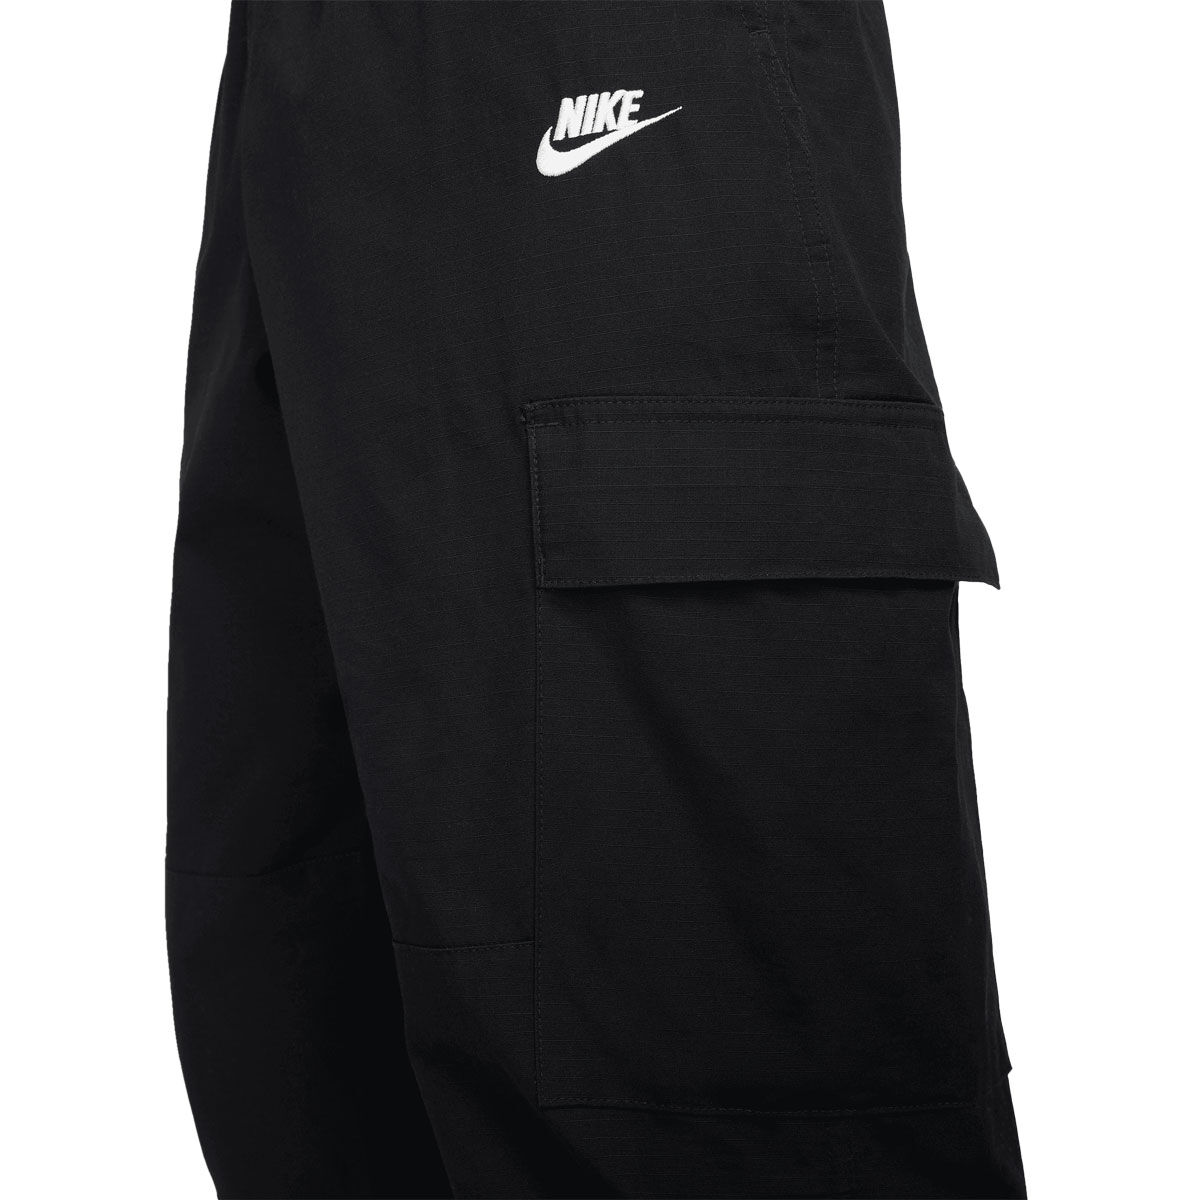 Nike SB Kearny Cargo Pants Tan